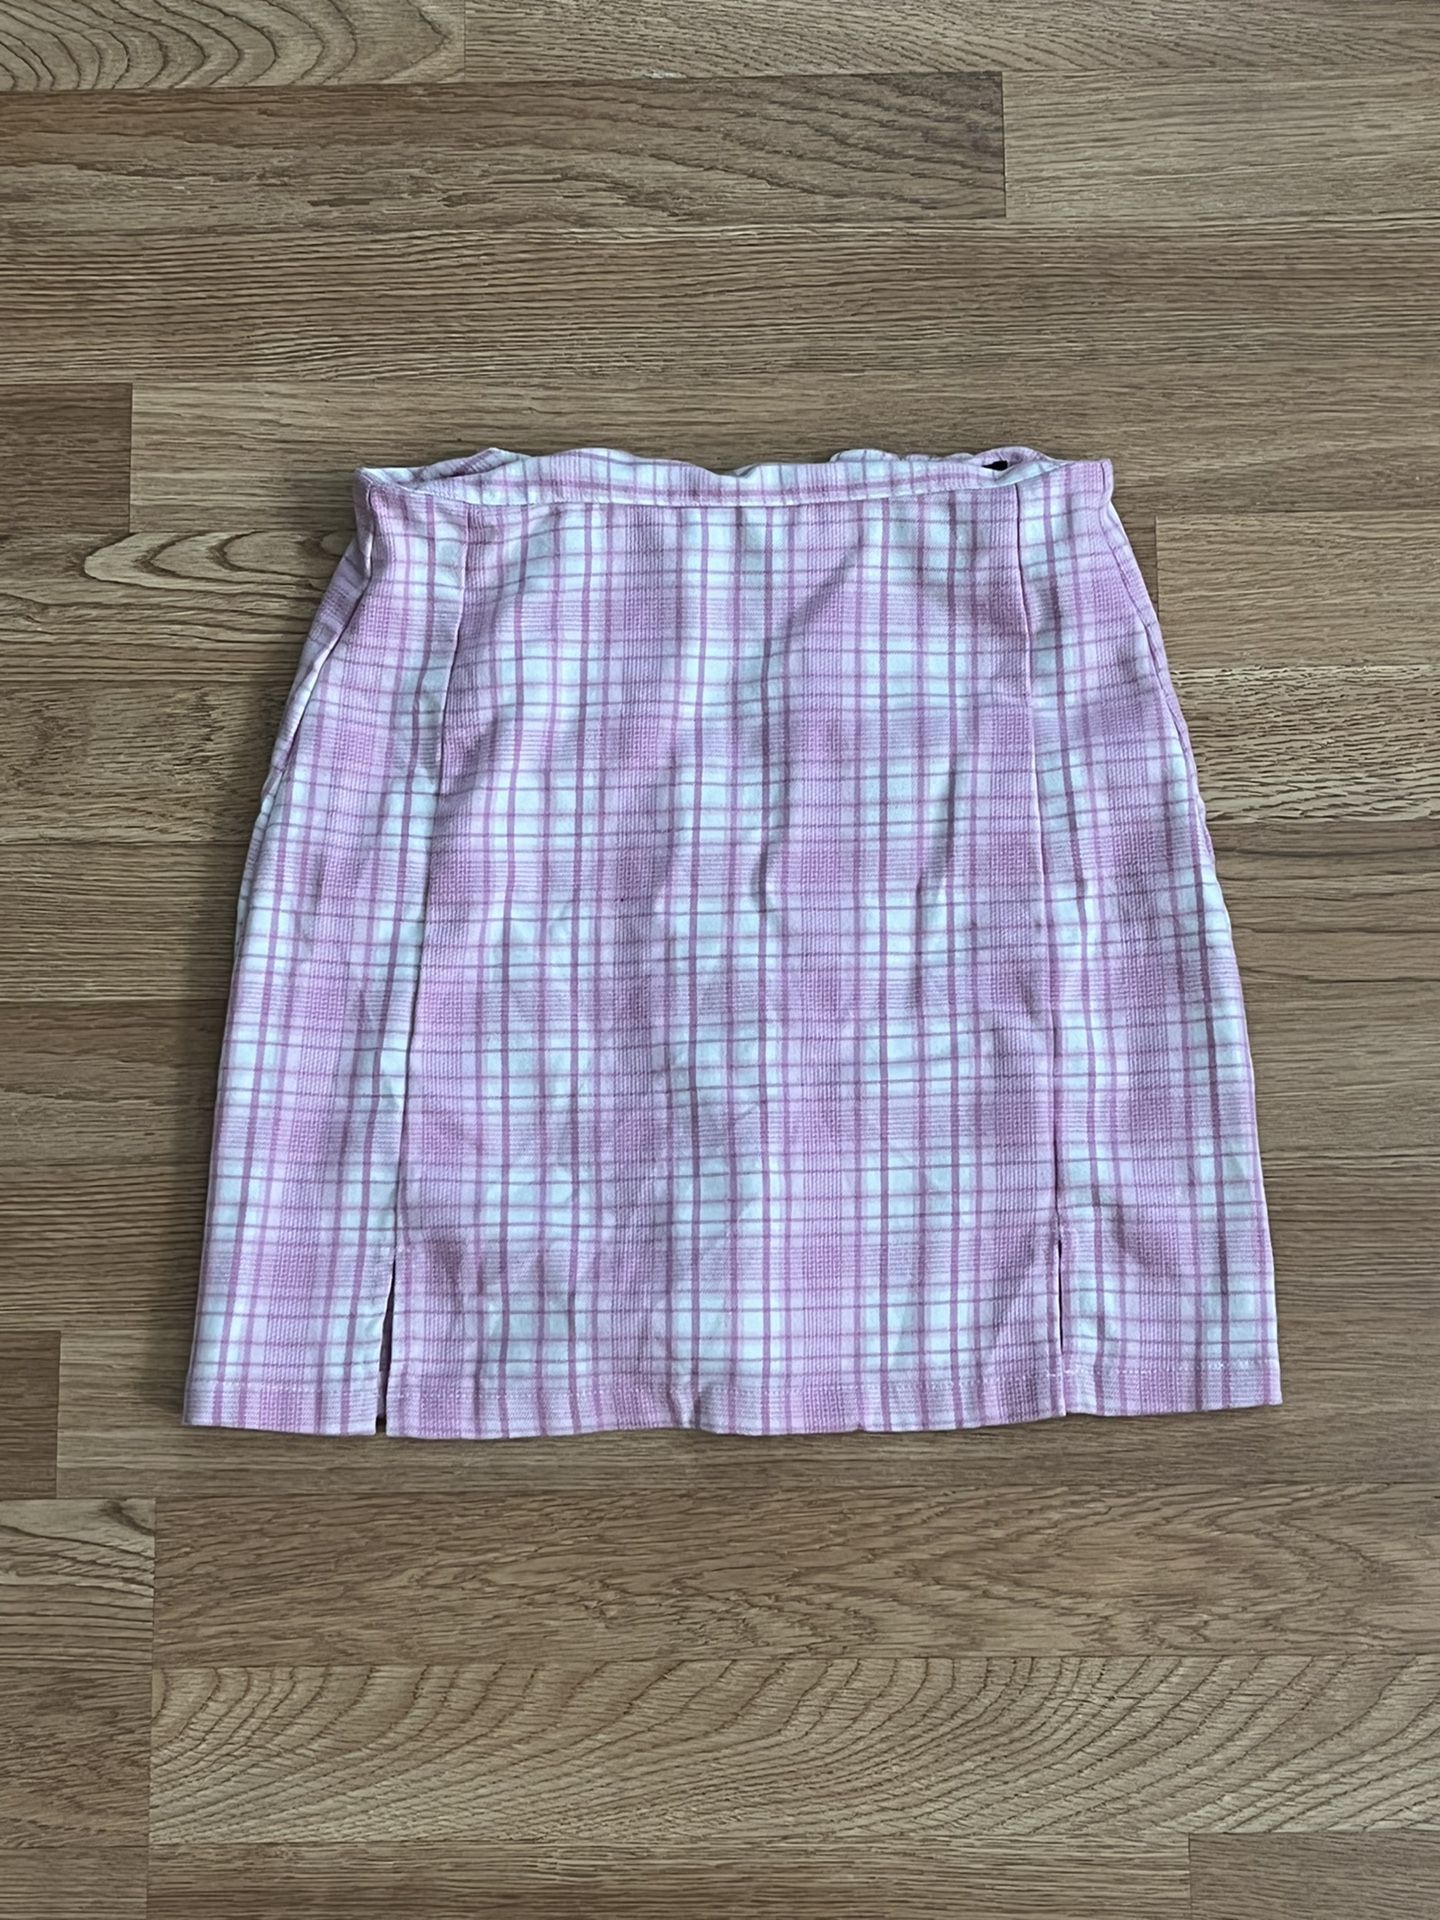 pink/white plaid skirt 